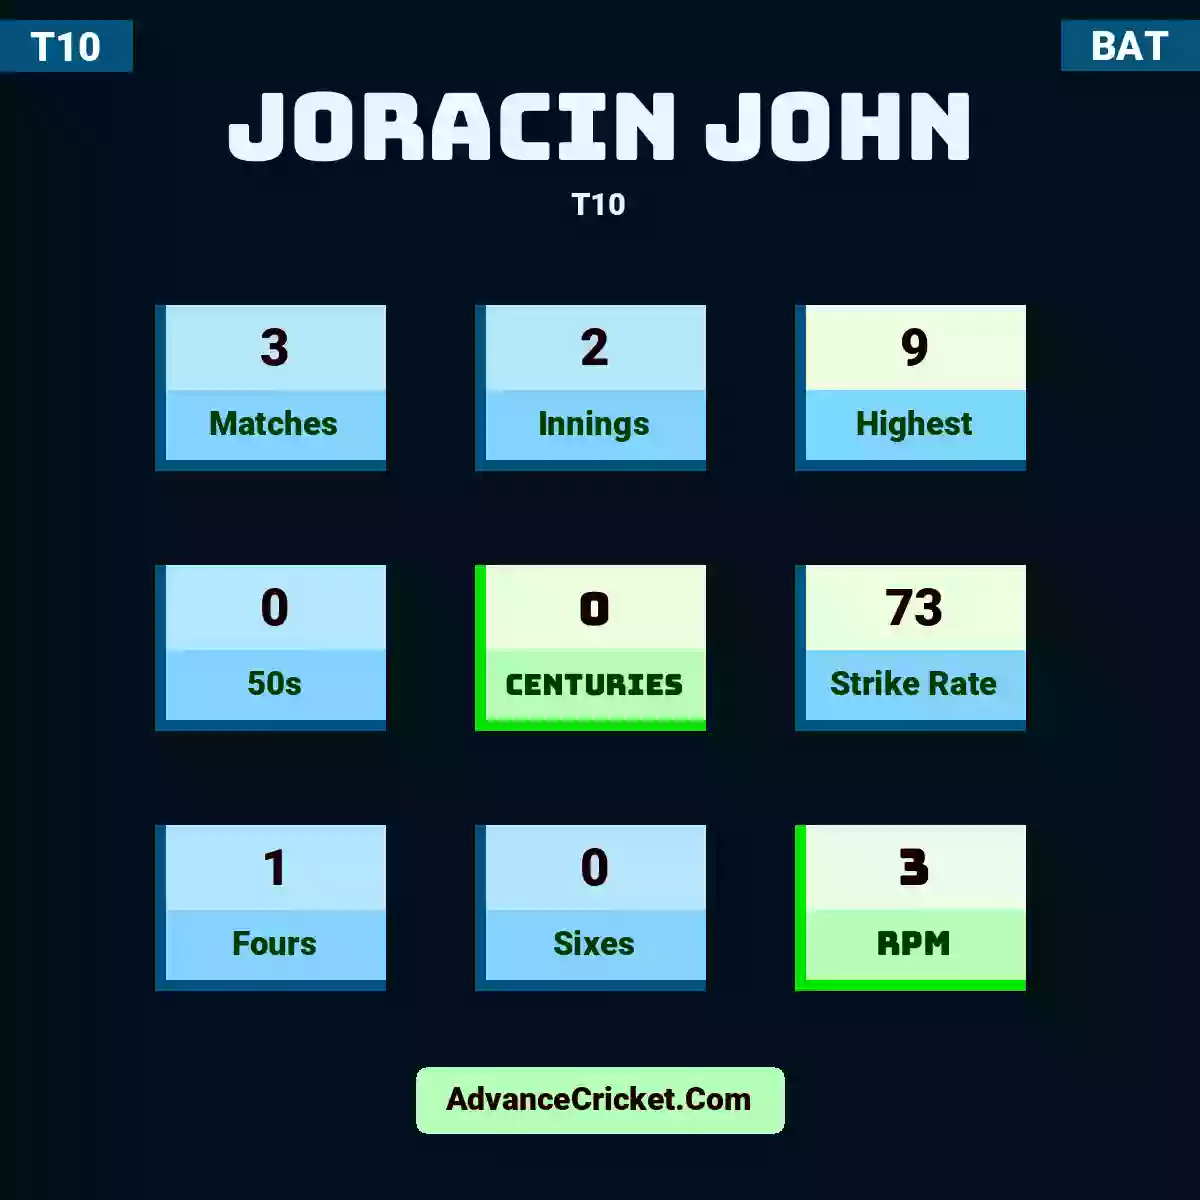 Joracin John T10 , Joracin John played 3 matches, scored 9 runs as highest, 0 half-centuries, and 0 centuries, with a strike rate of 73. J.John hit 1 fours and 0 sixes, with an RPM of 3.